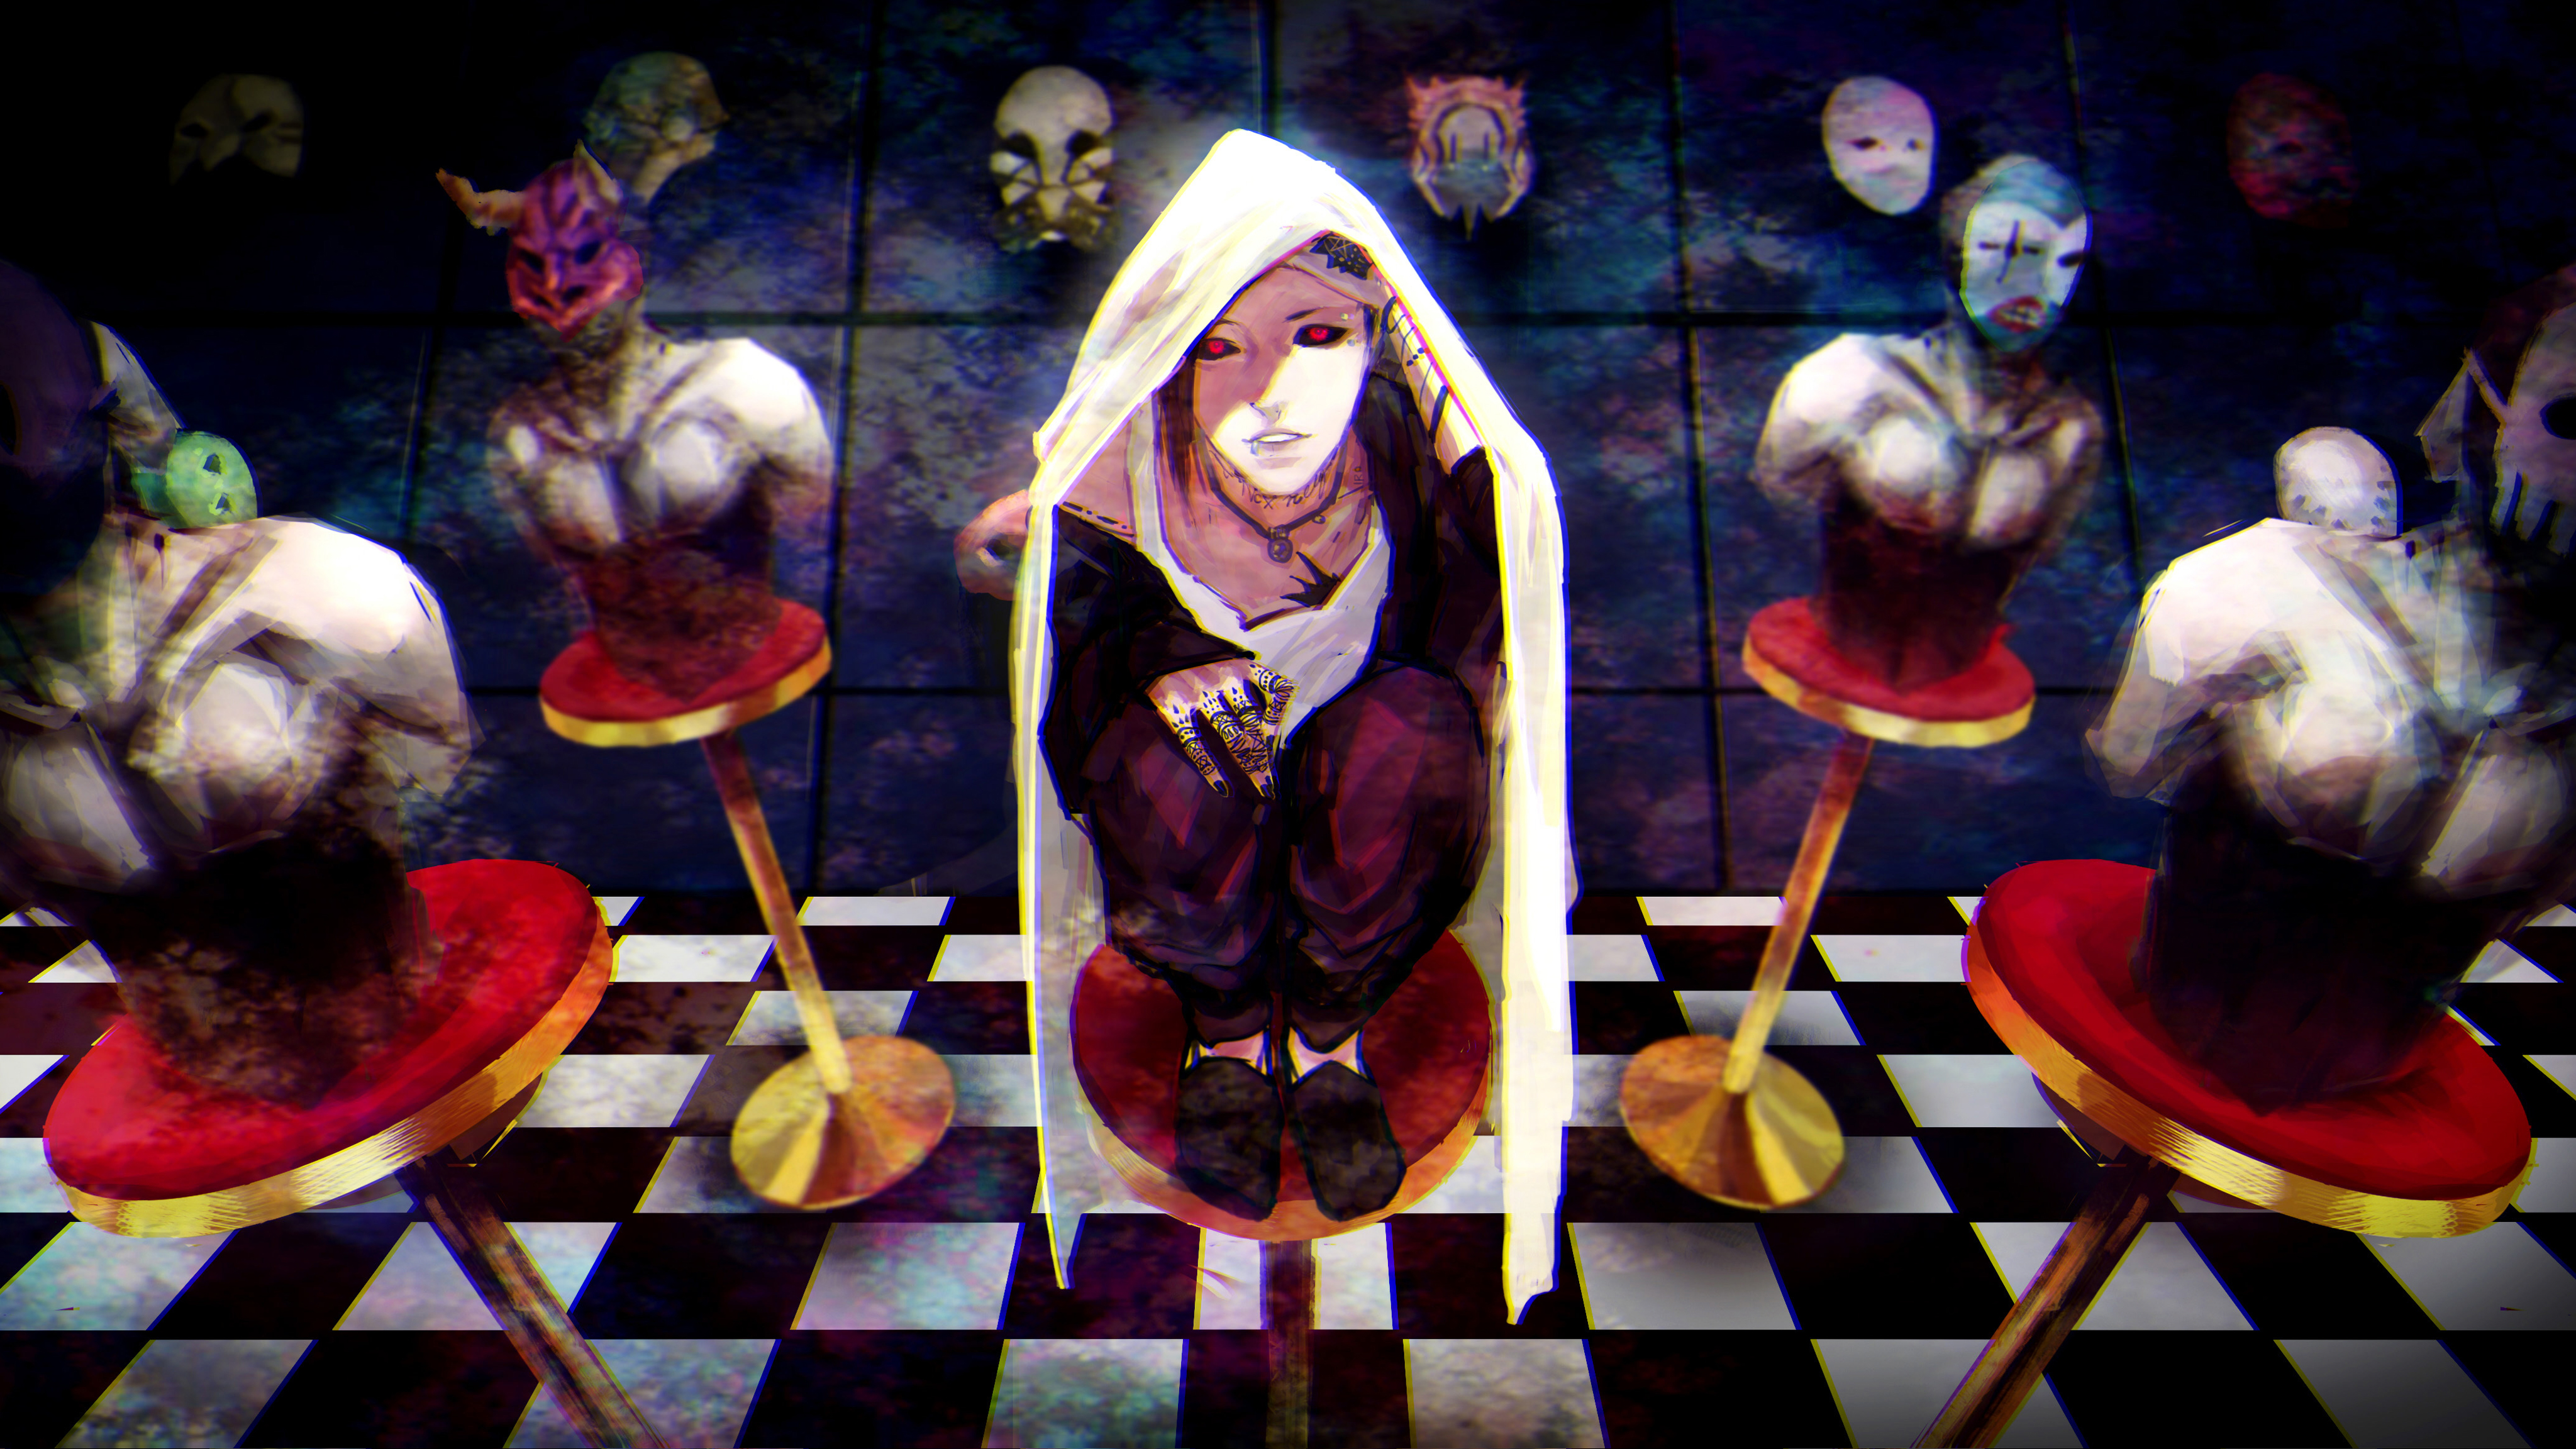 Uta Tokyo Ghoul HD Wallpaper Background Image